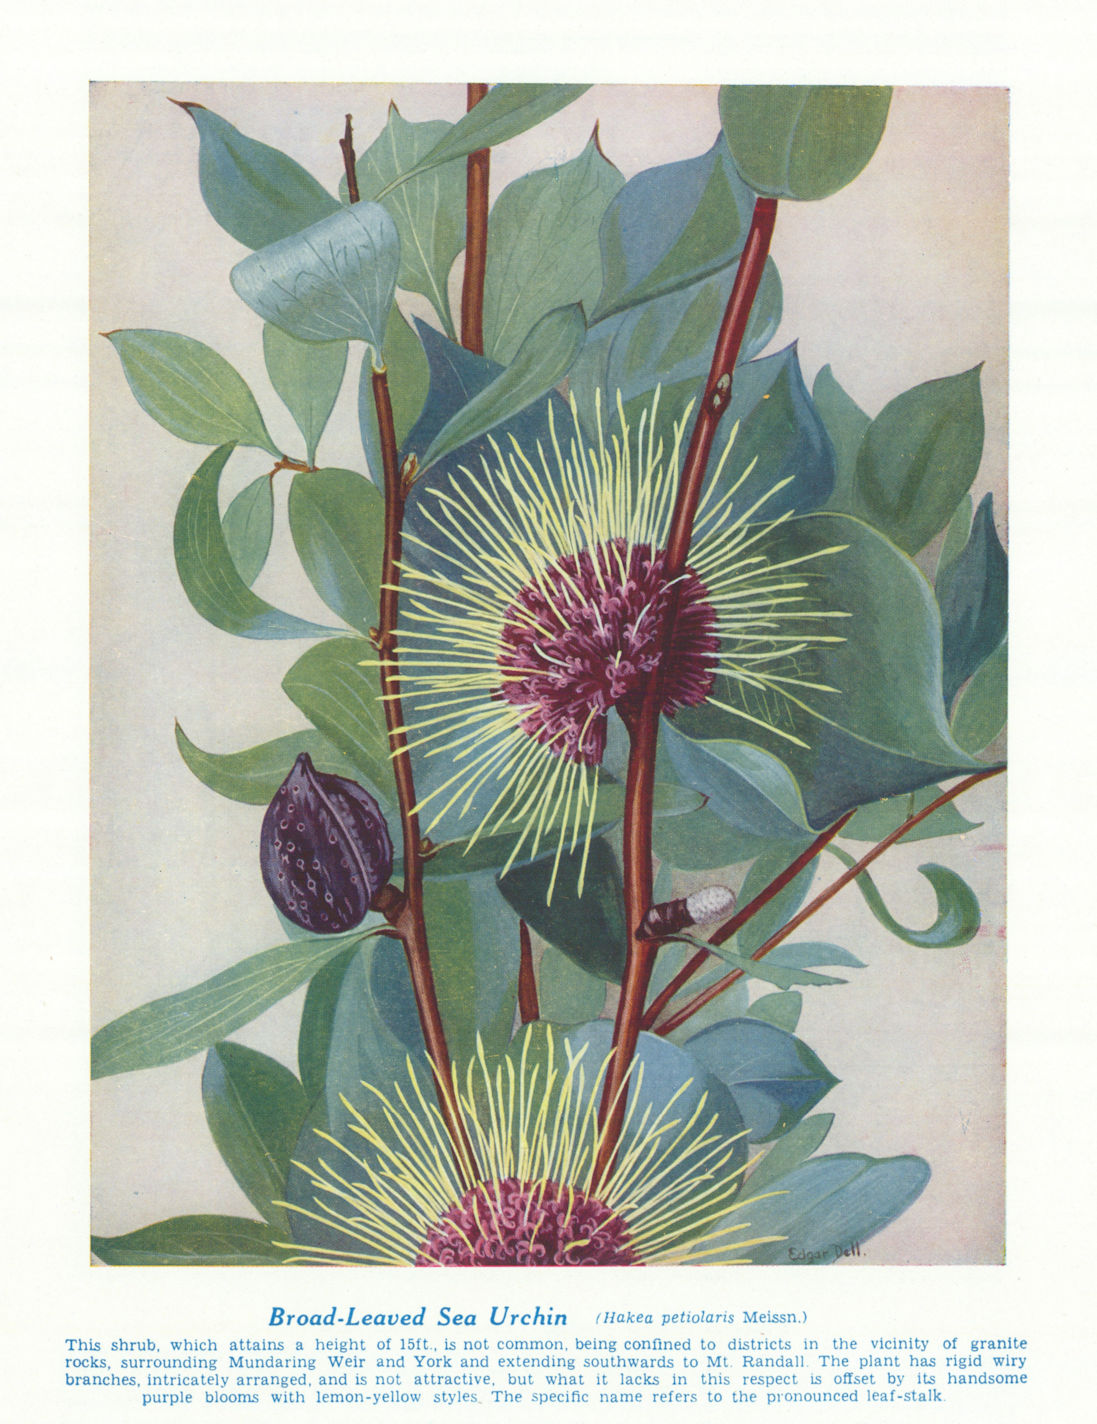 Broad-leaved Sea Urchin (Hakea petiolaris). West Australian Wild Flowers 1950